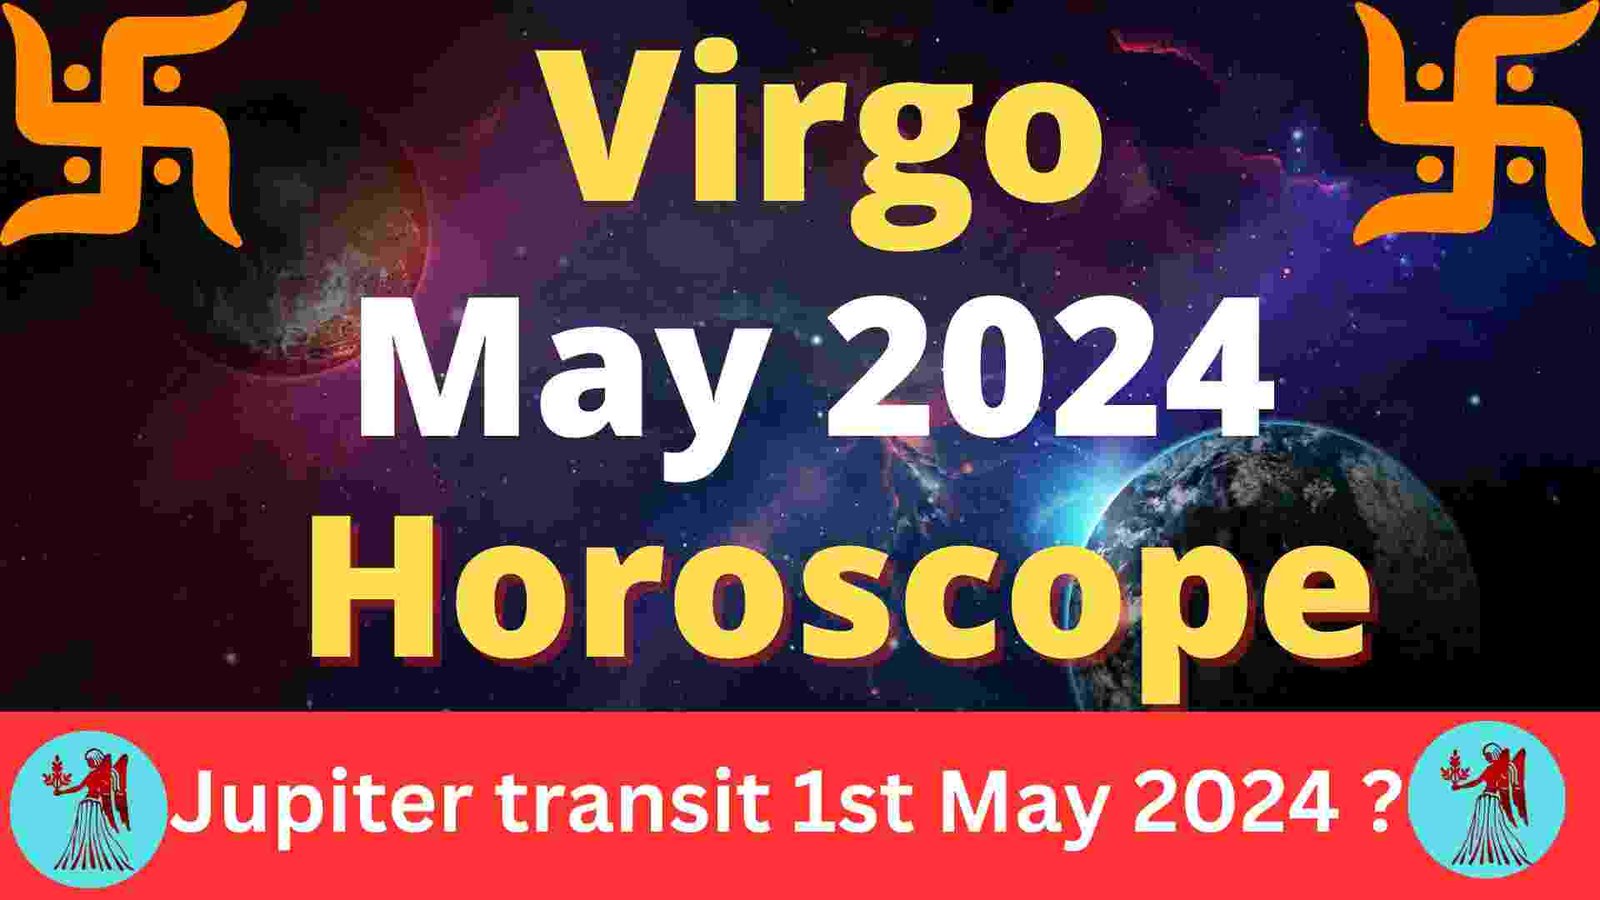 Horoscope May 2024 Virgo ascendant